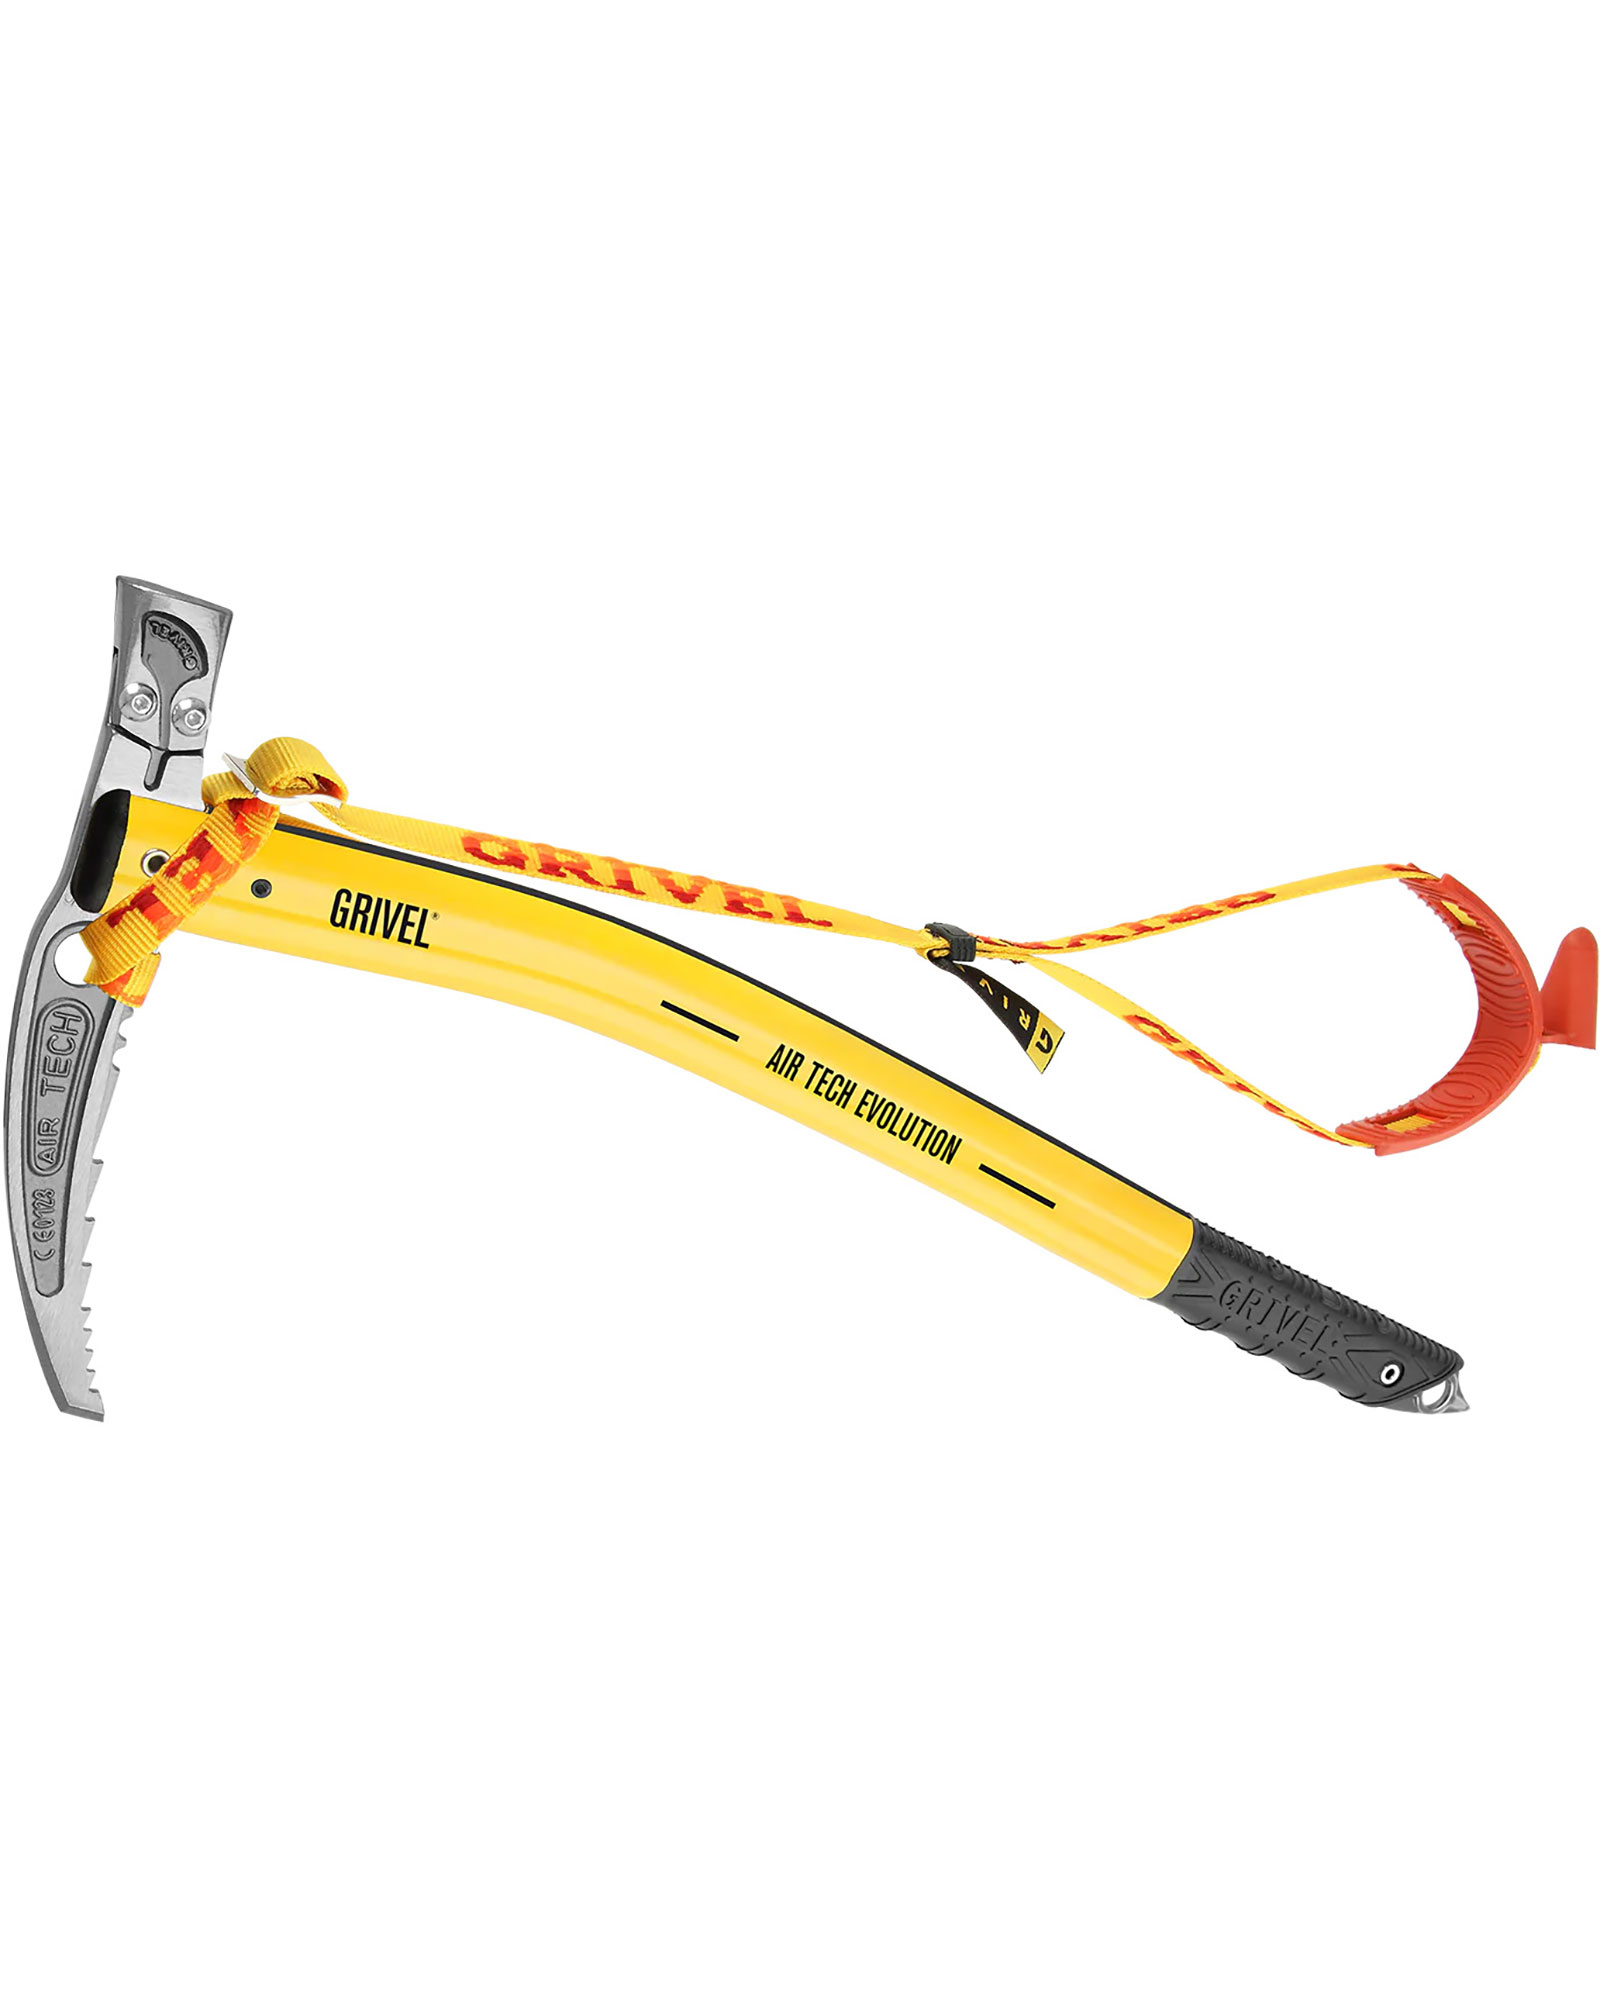 Grivel Air Tech Evo Hammer - Yellow 53cm